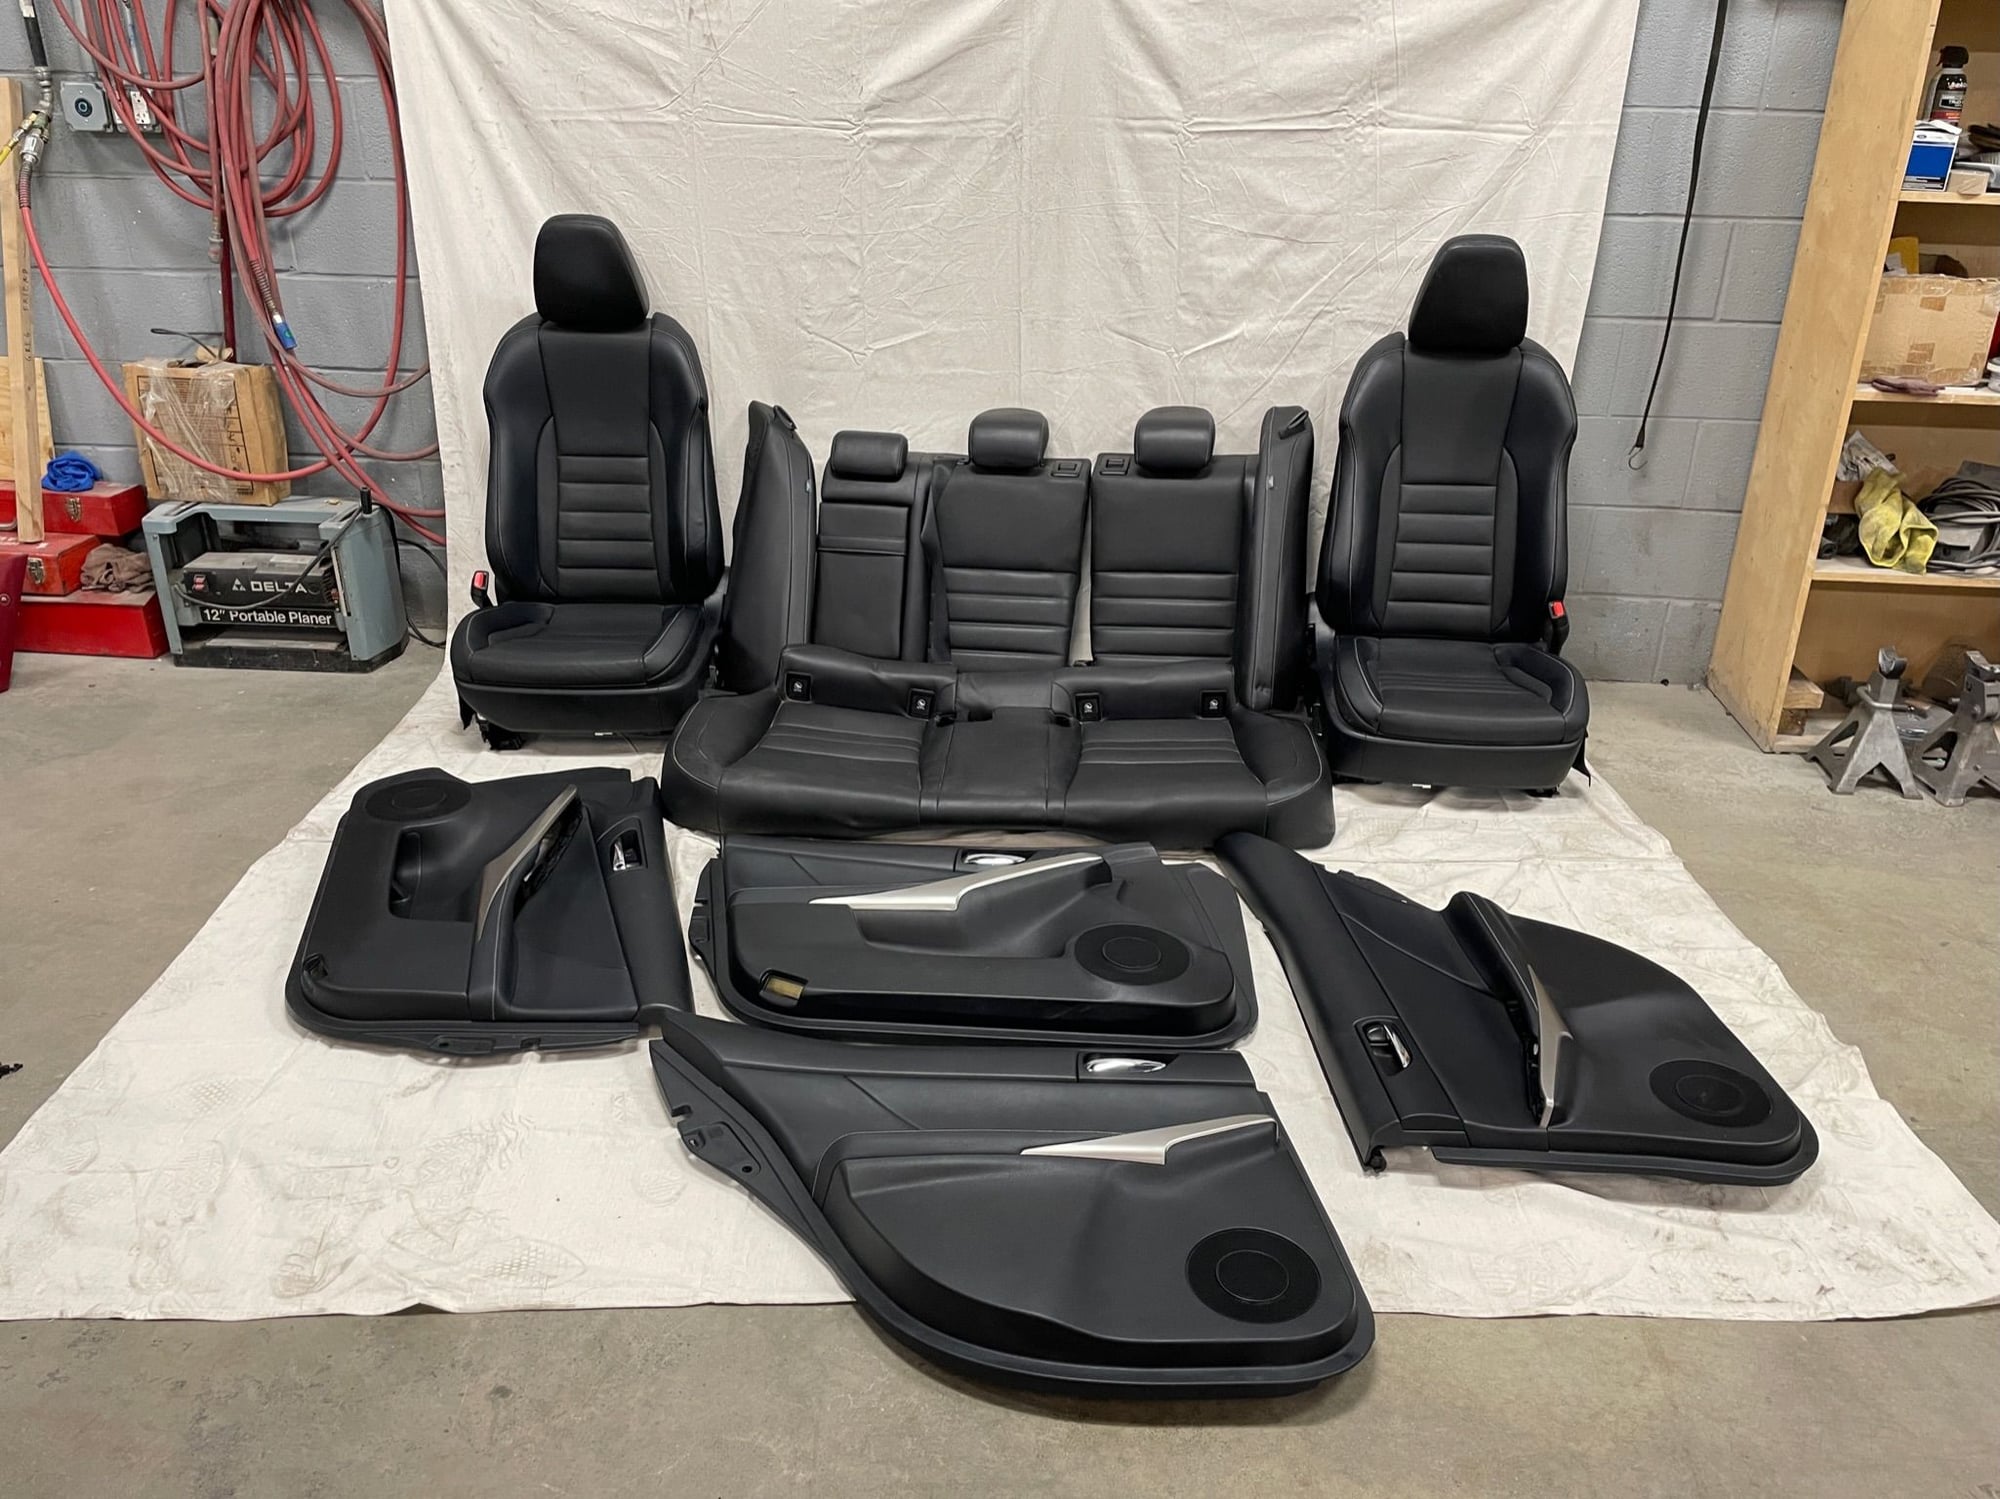 Interior/Upholstery - 2014-2020 Lexus 3 IS Black F Sport Interior Set - Used - 2014 to 2020 Lexus IS - Arlington Heights, IL 60004, United States